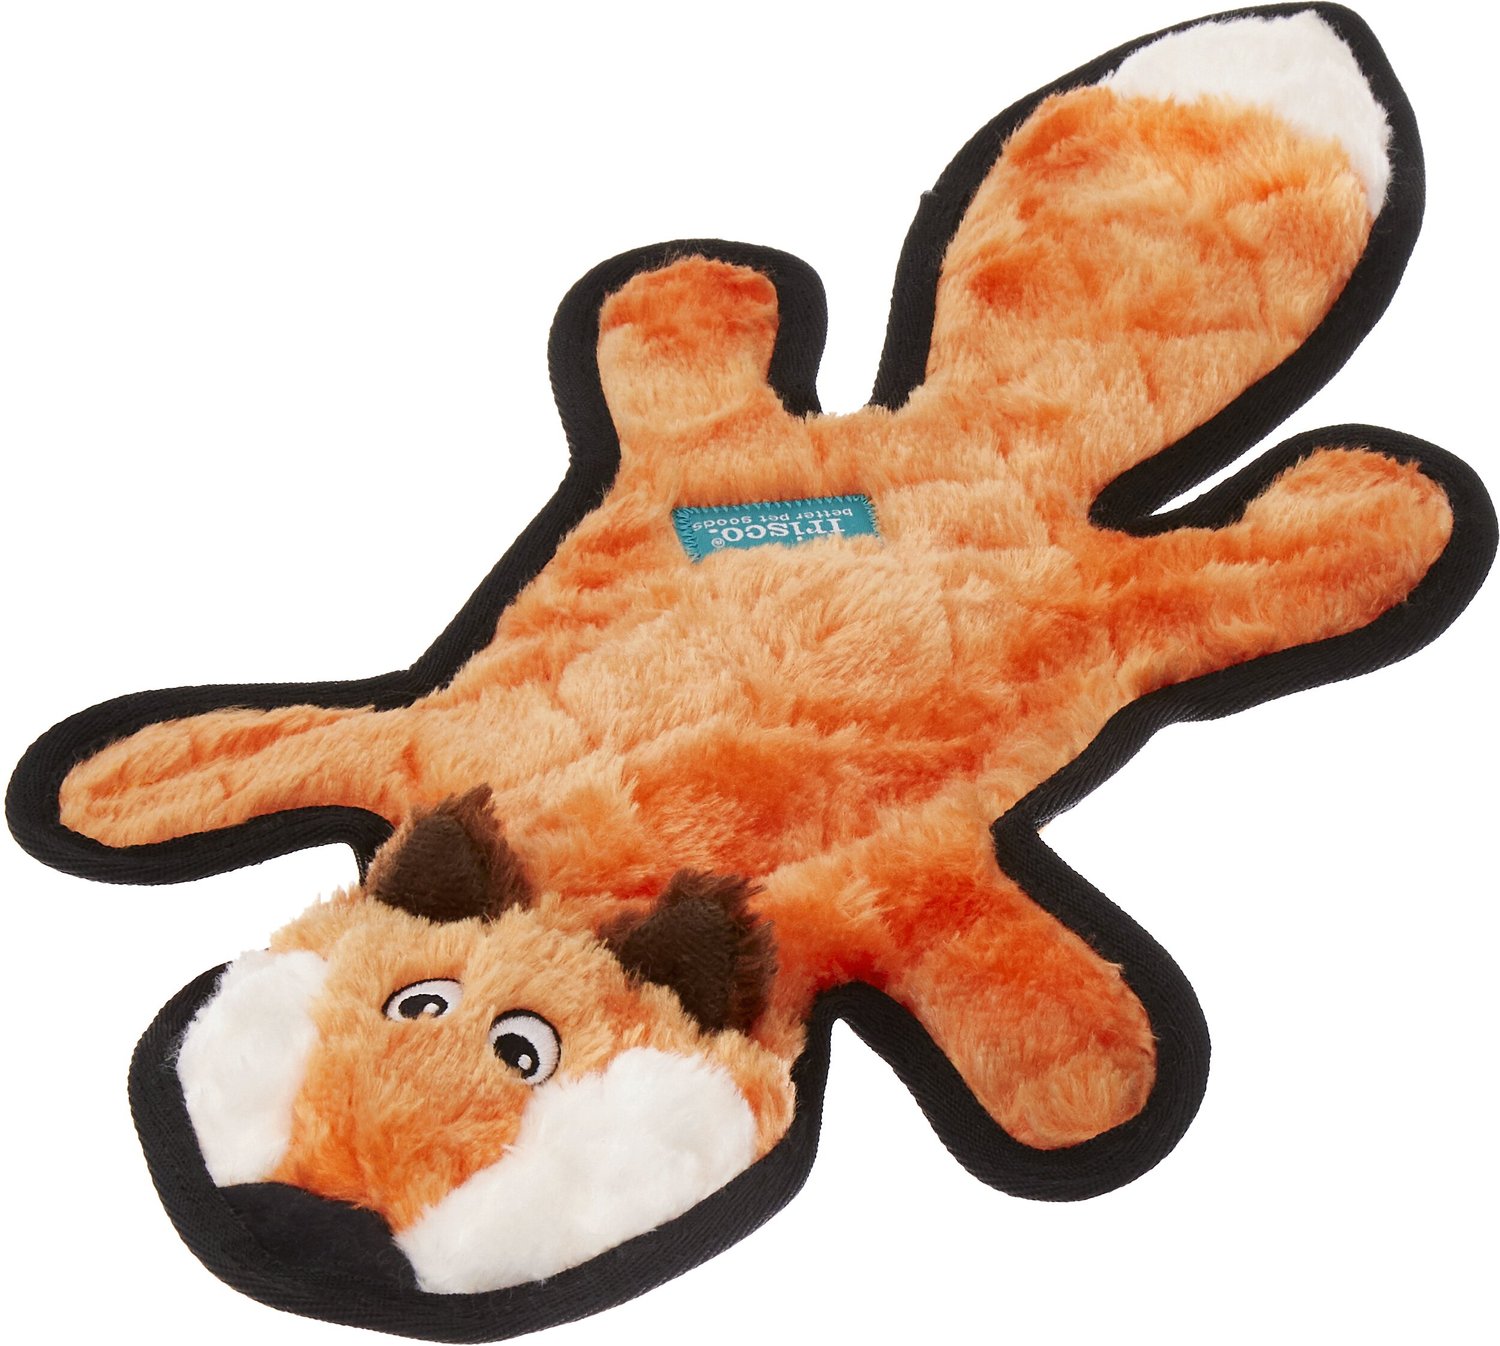 flat stuffed animal